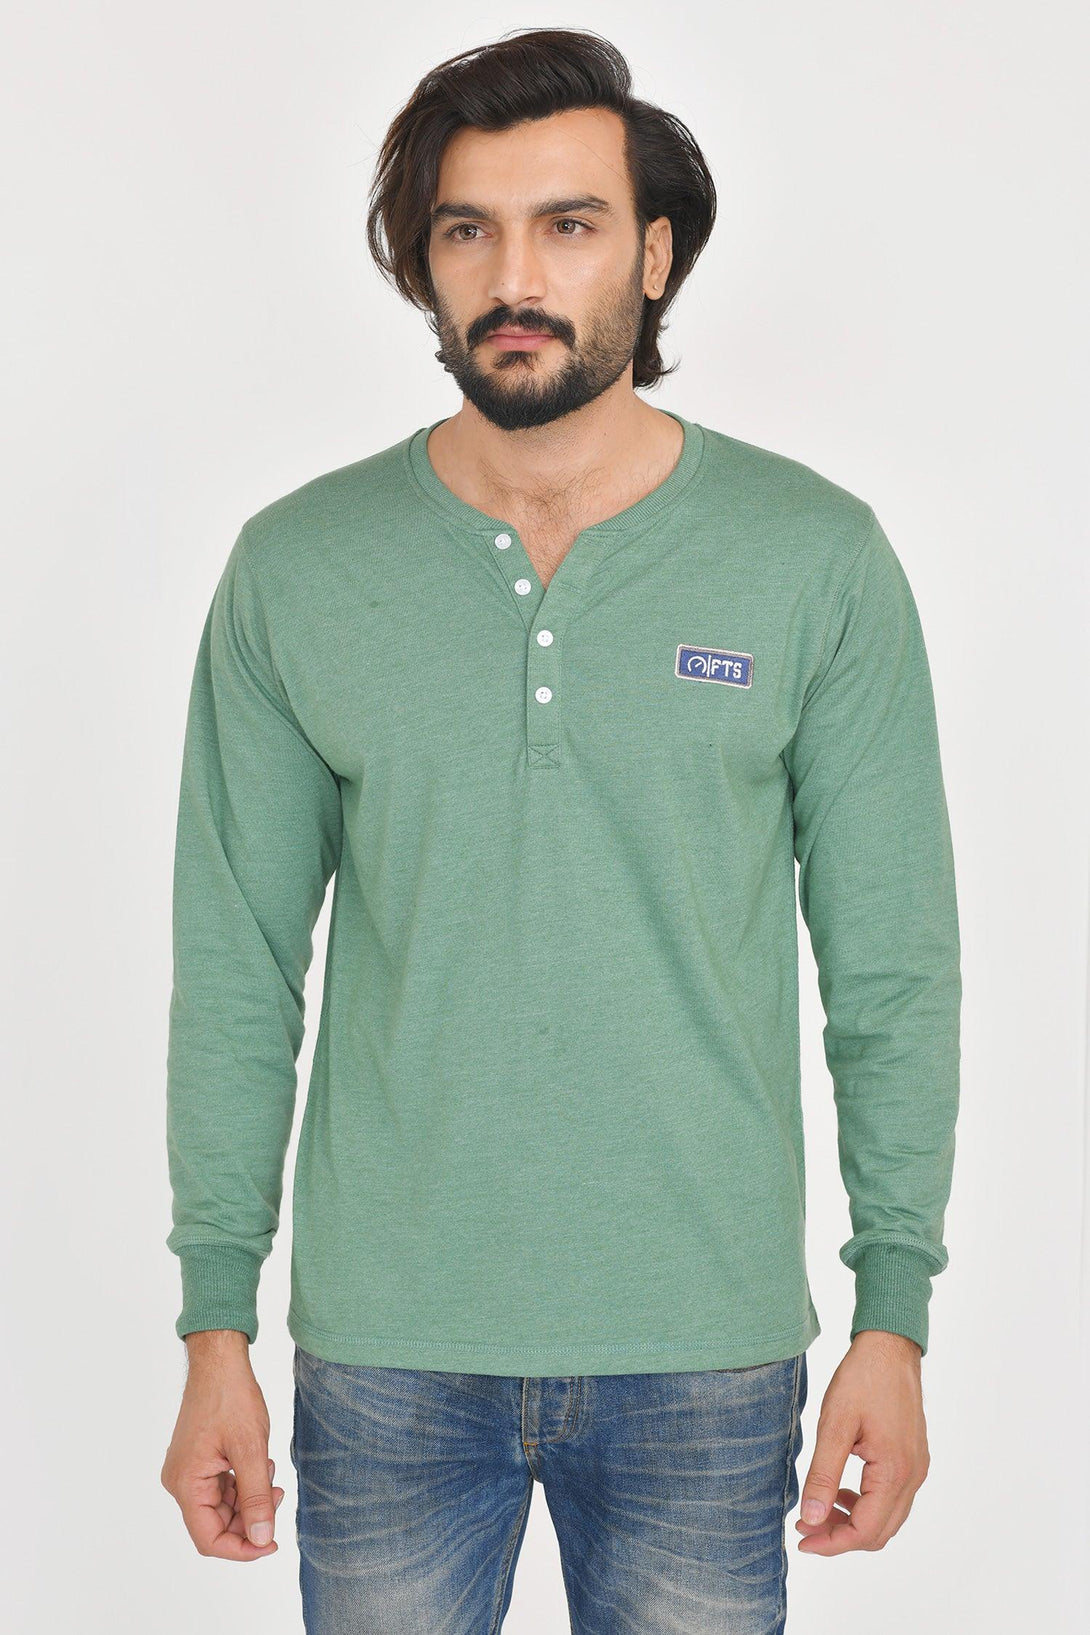 HENLEY Full Sleeve Shirts | WINE & GREEN MELANGE Pack of 2 - FTS